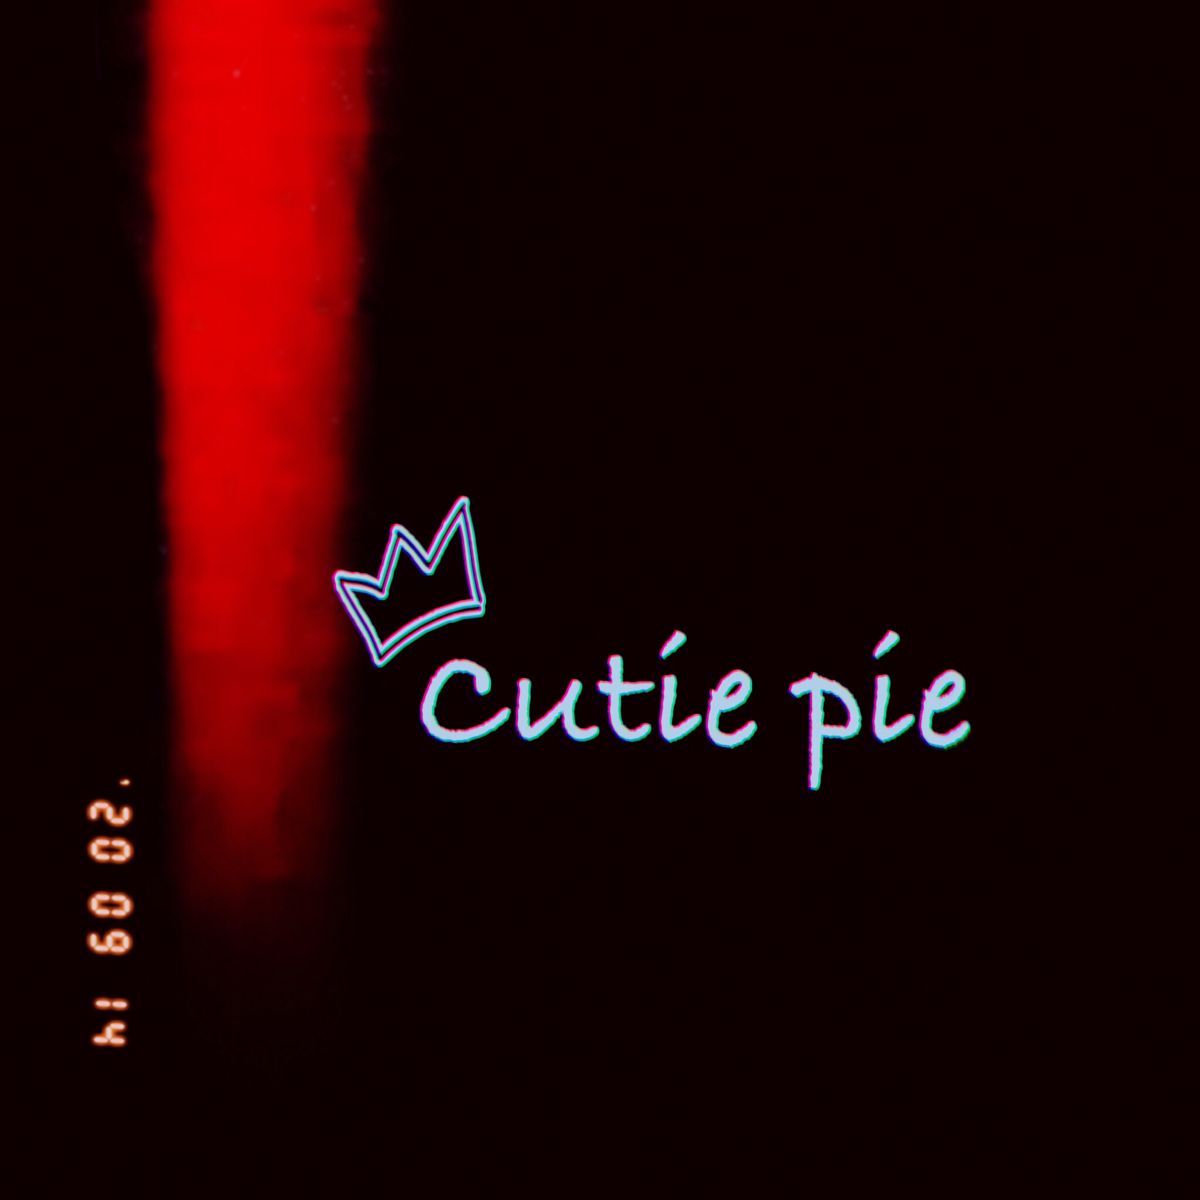 Cutie Pie Image Wallpapers